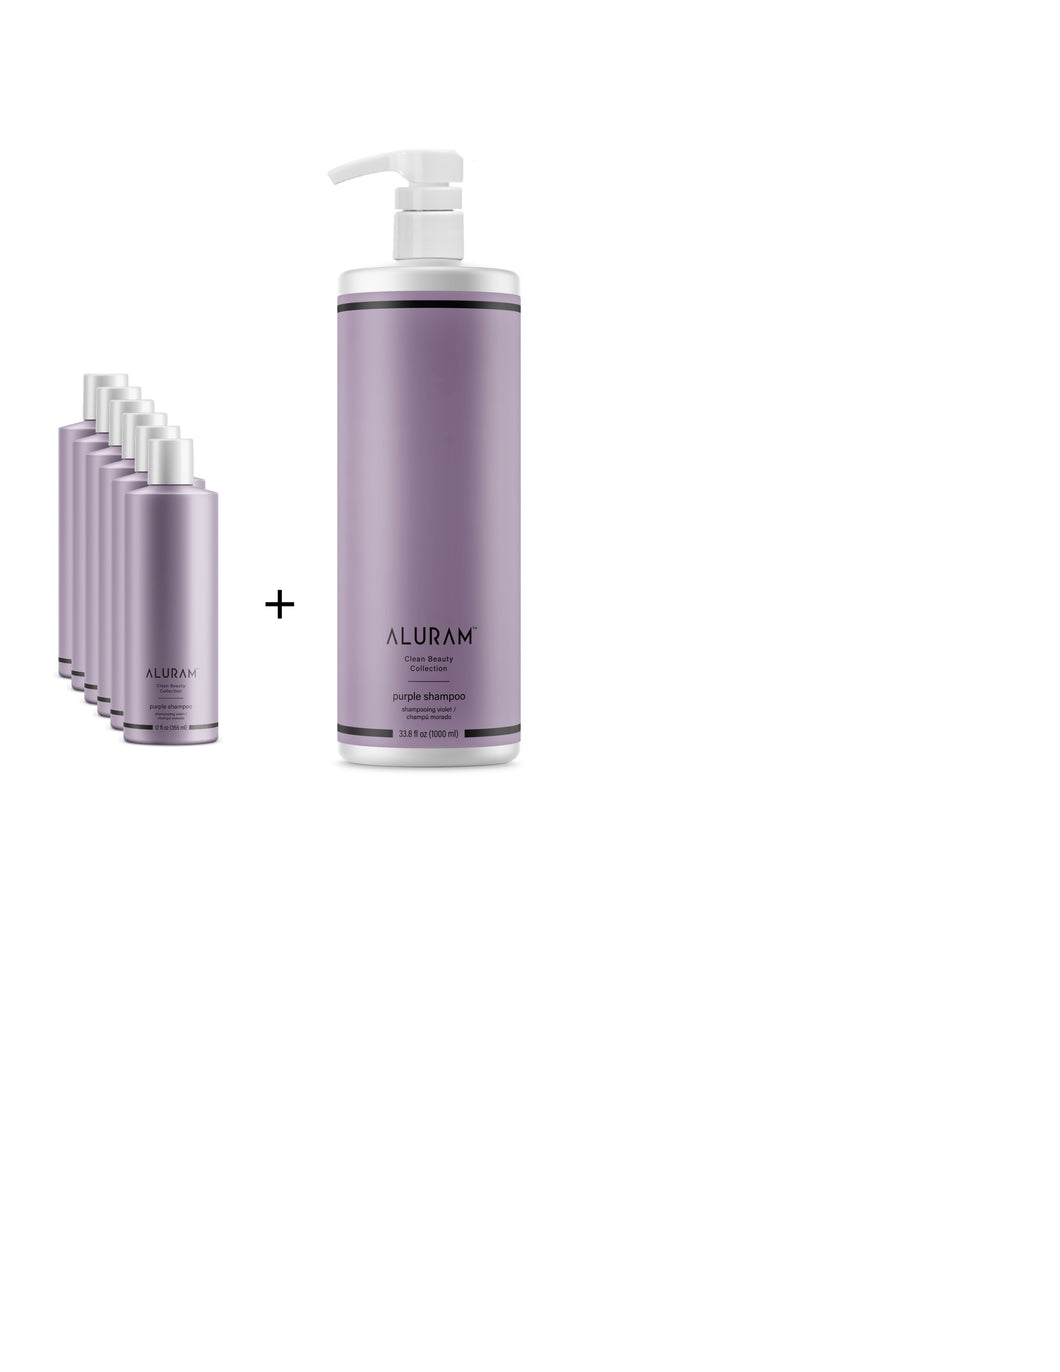 Aluram Purples Shampoo Deal!👍👍👍